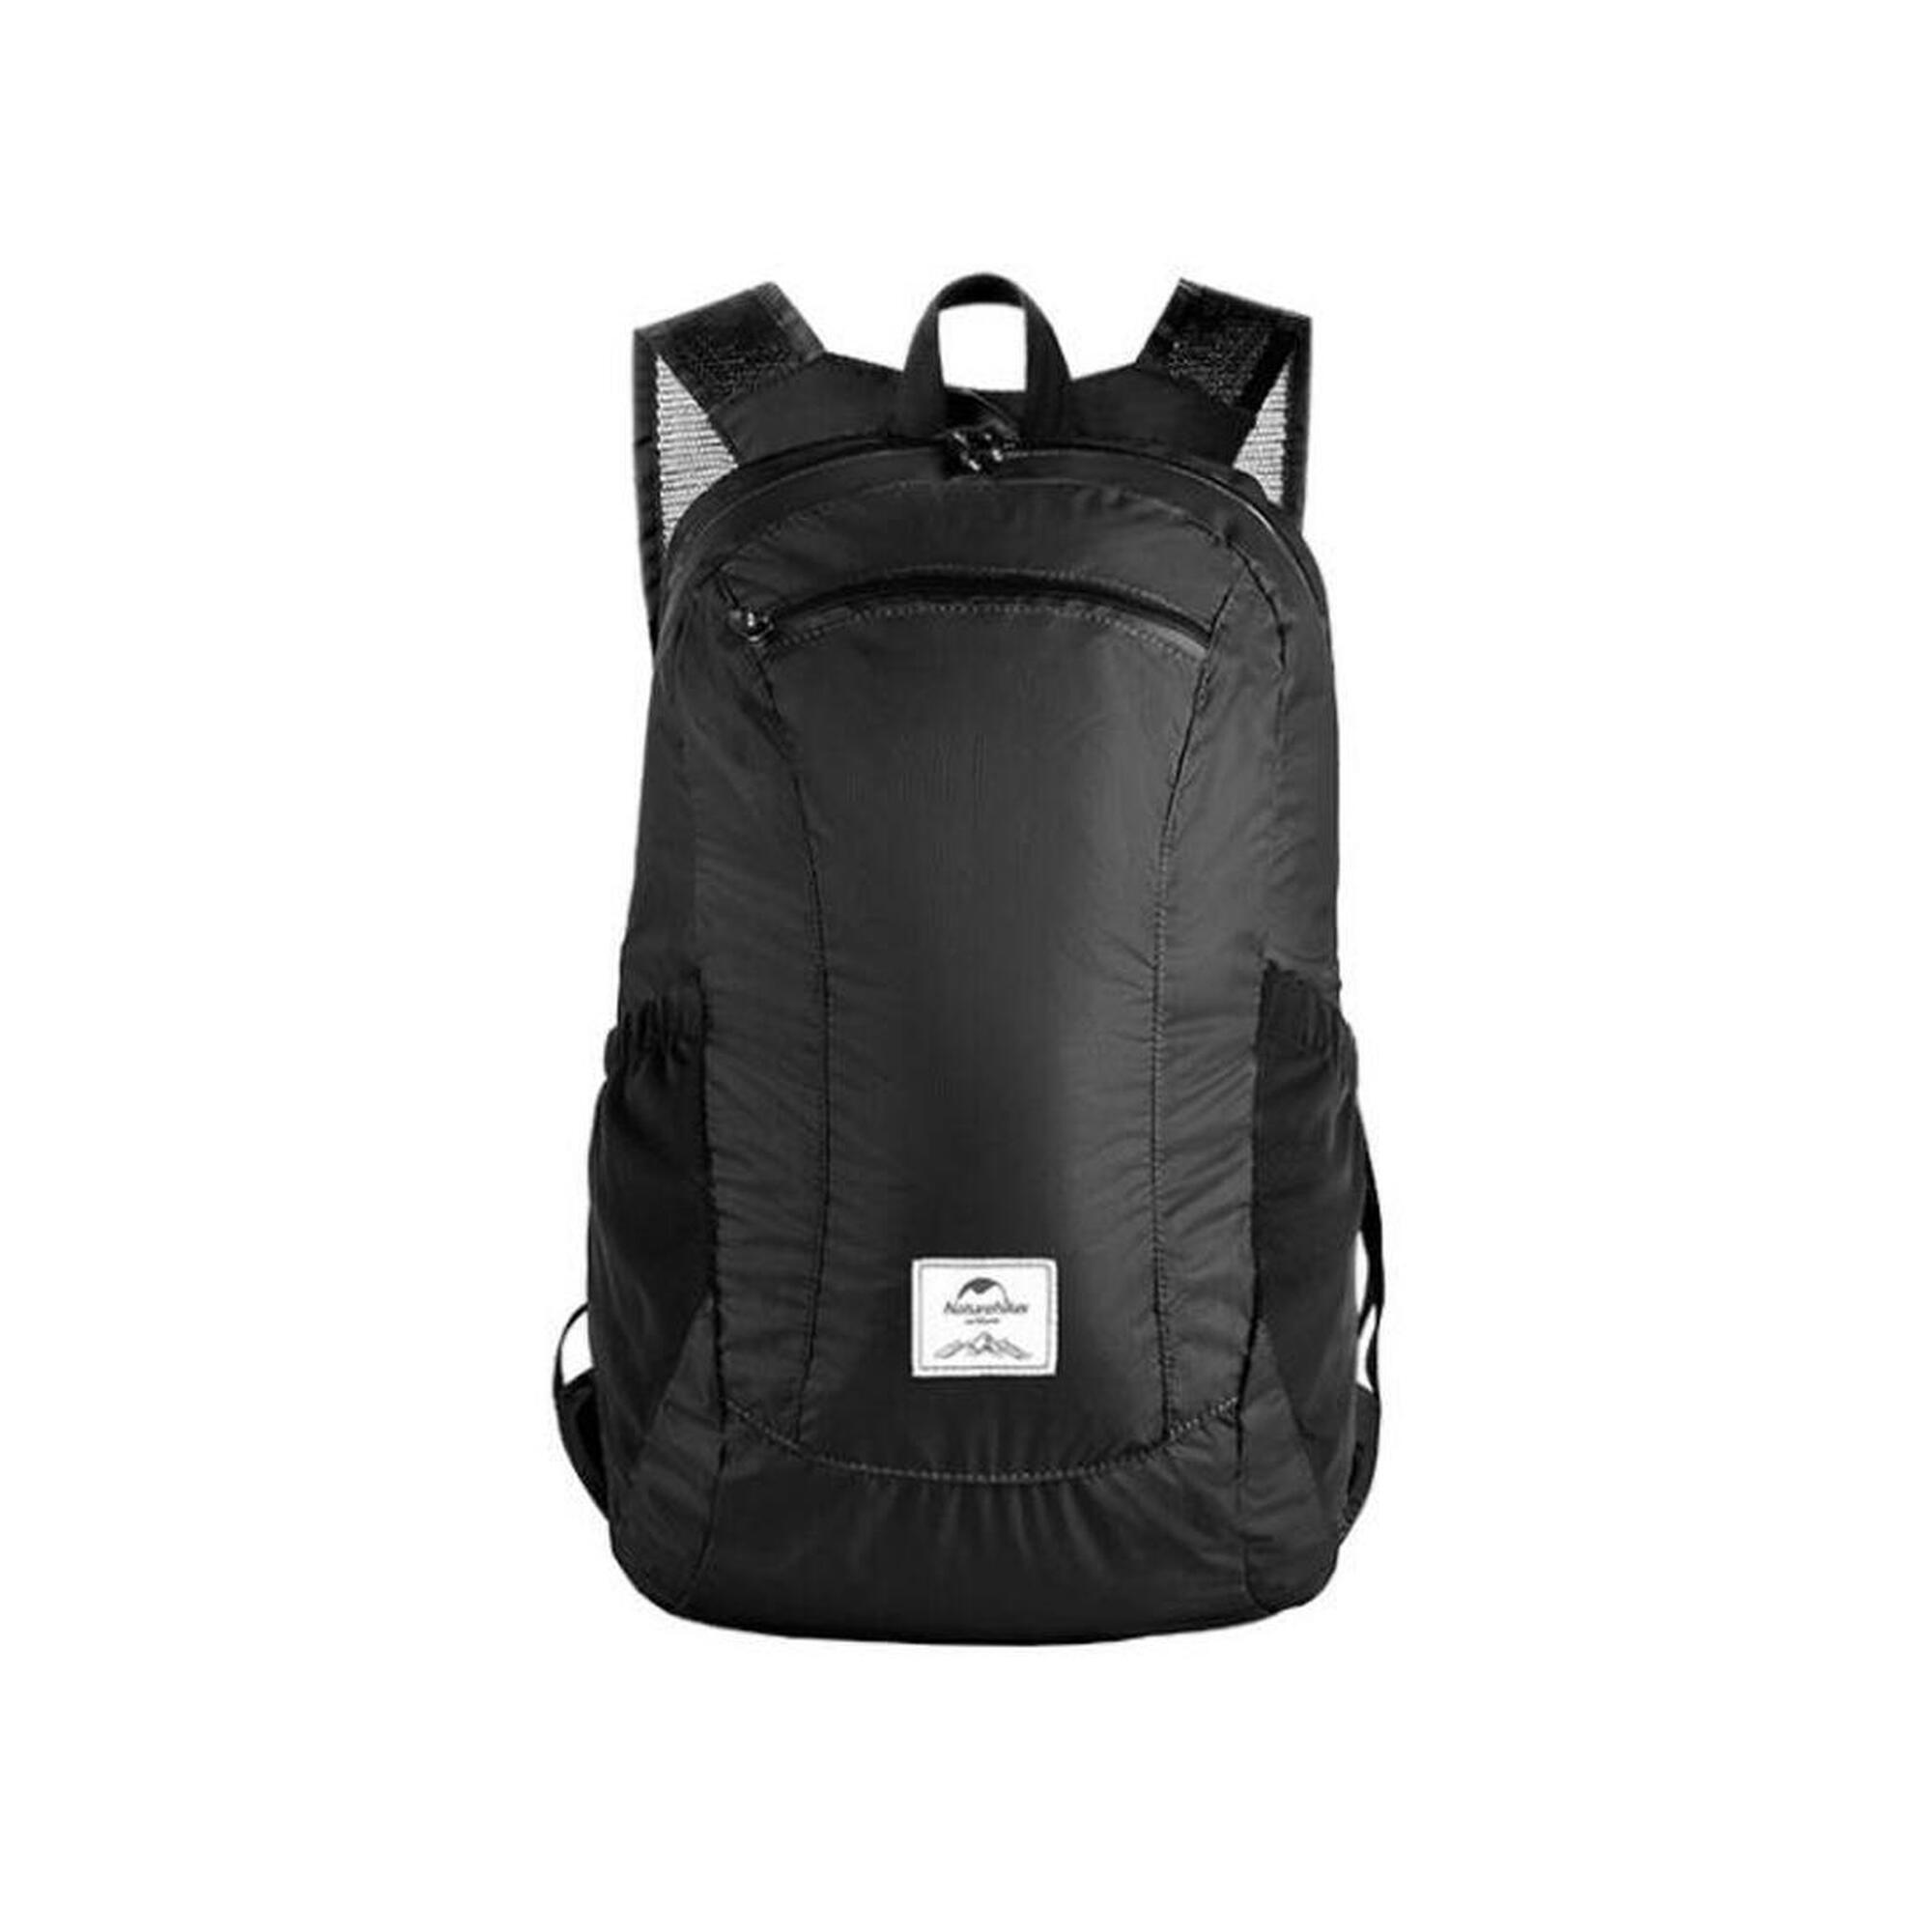 Ultralight Folding Backpack 18L - Black